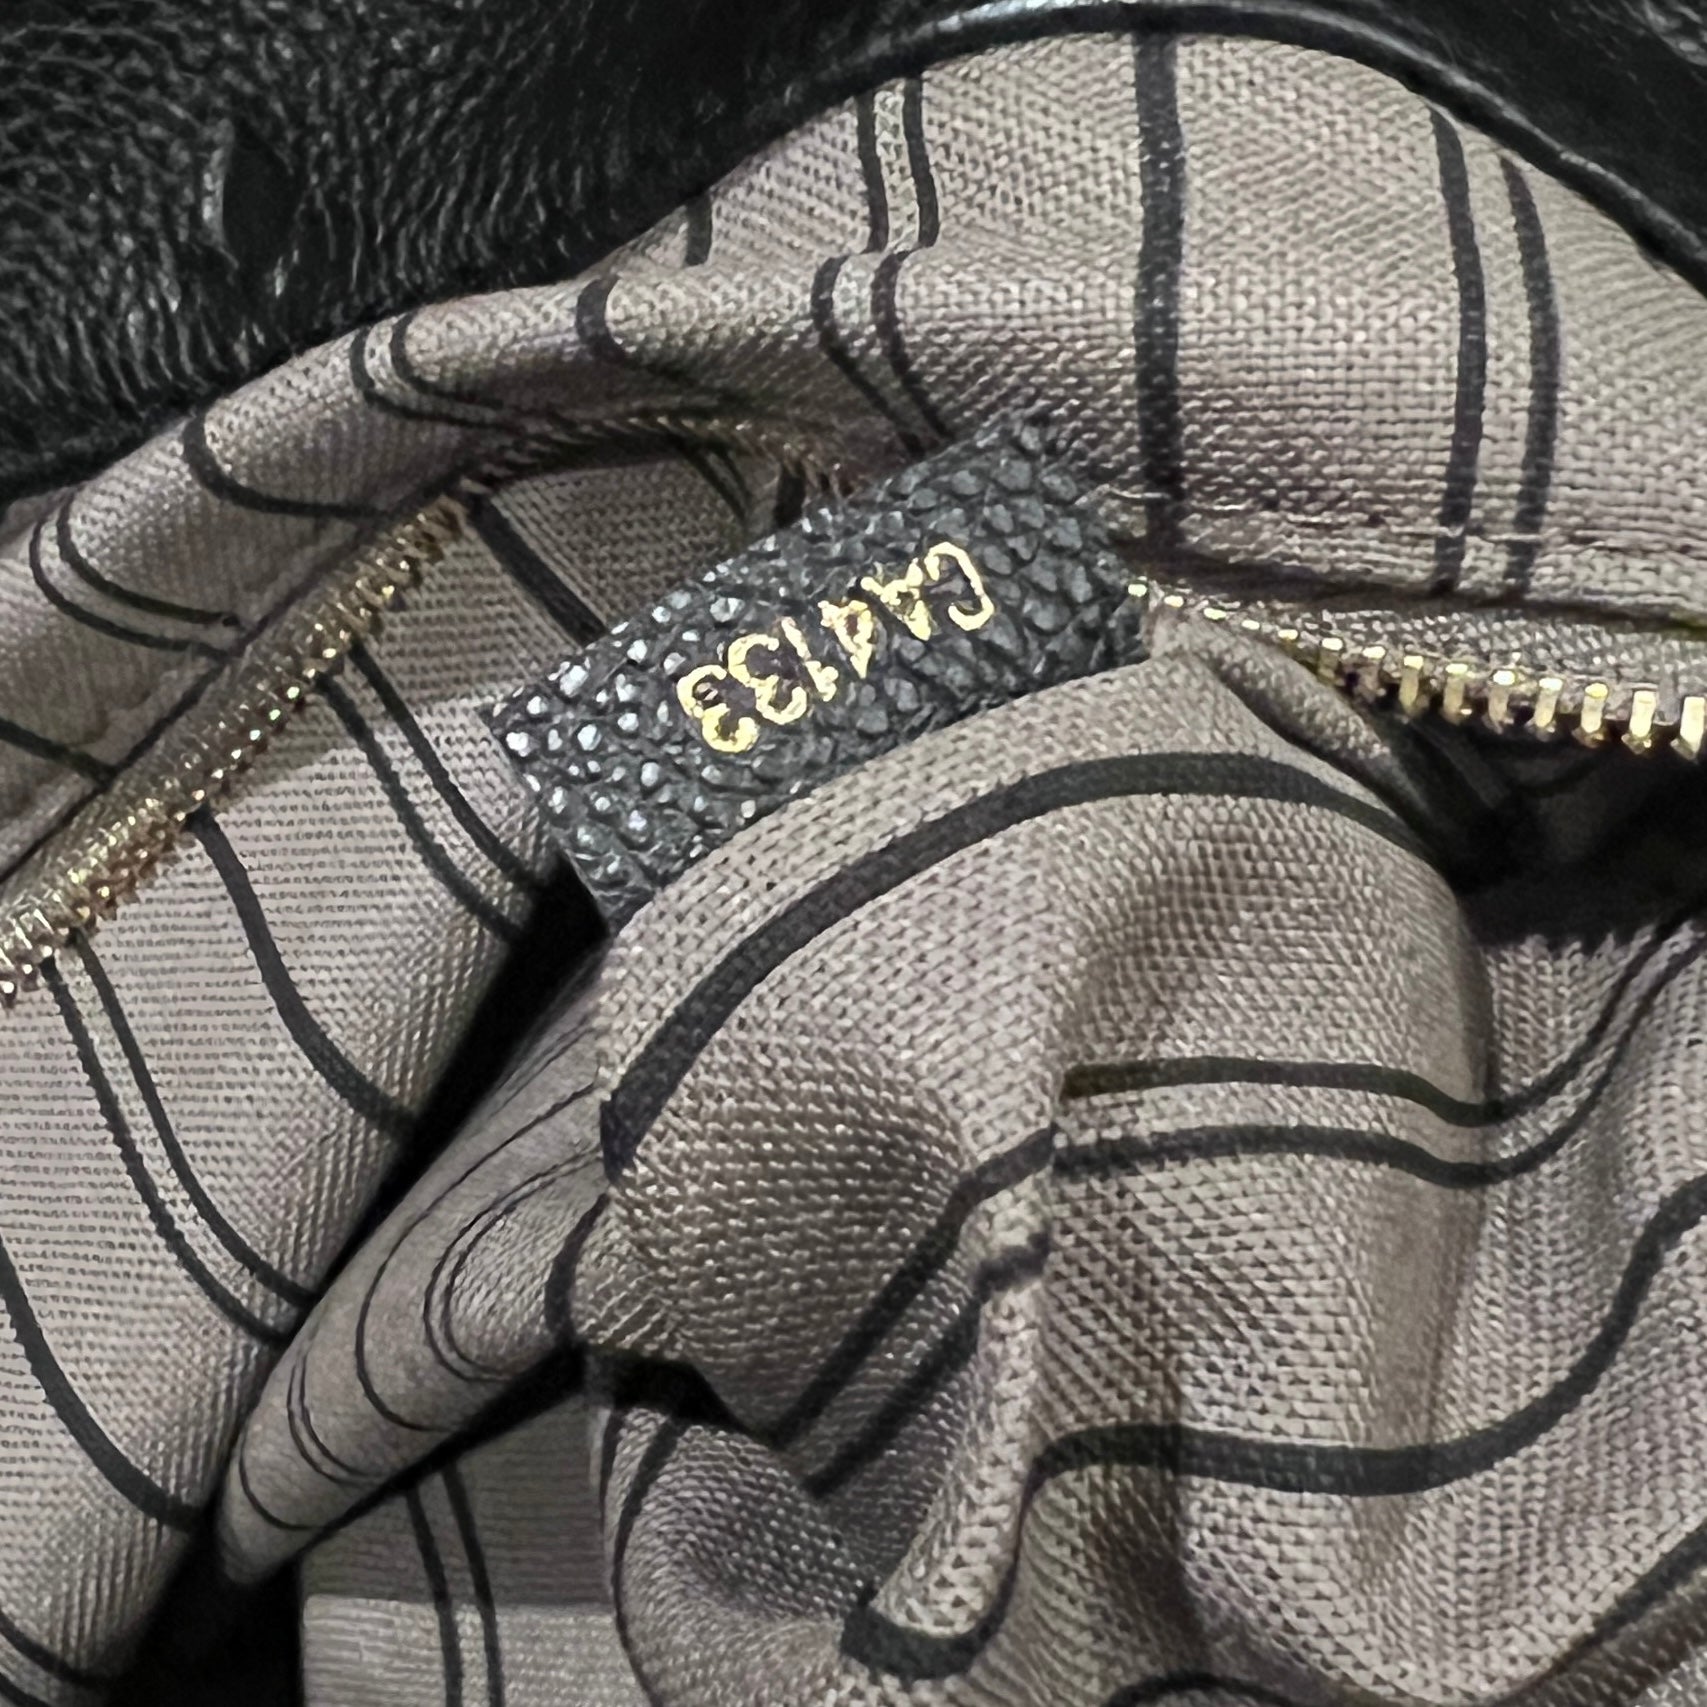 Preloved Louis Vuitton Monogram Black Empreinte Leather Double Zip